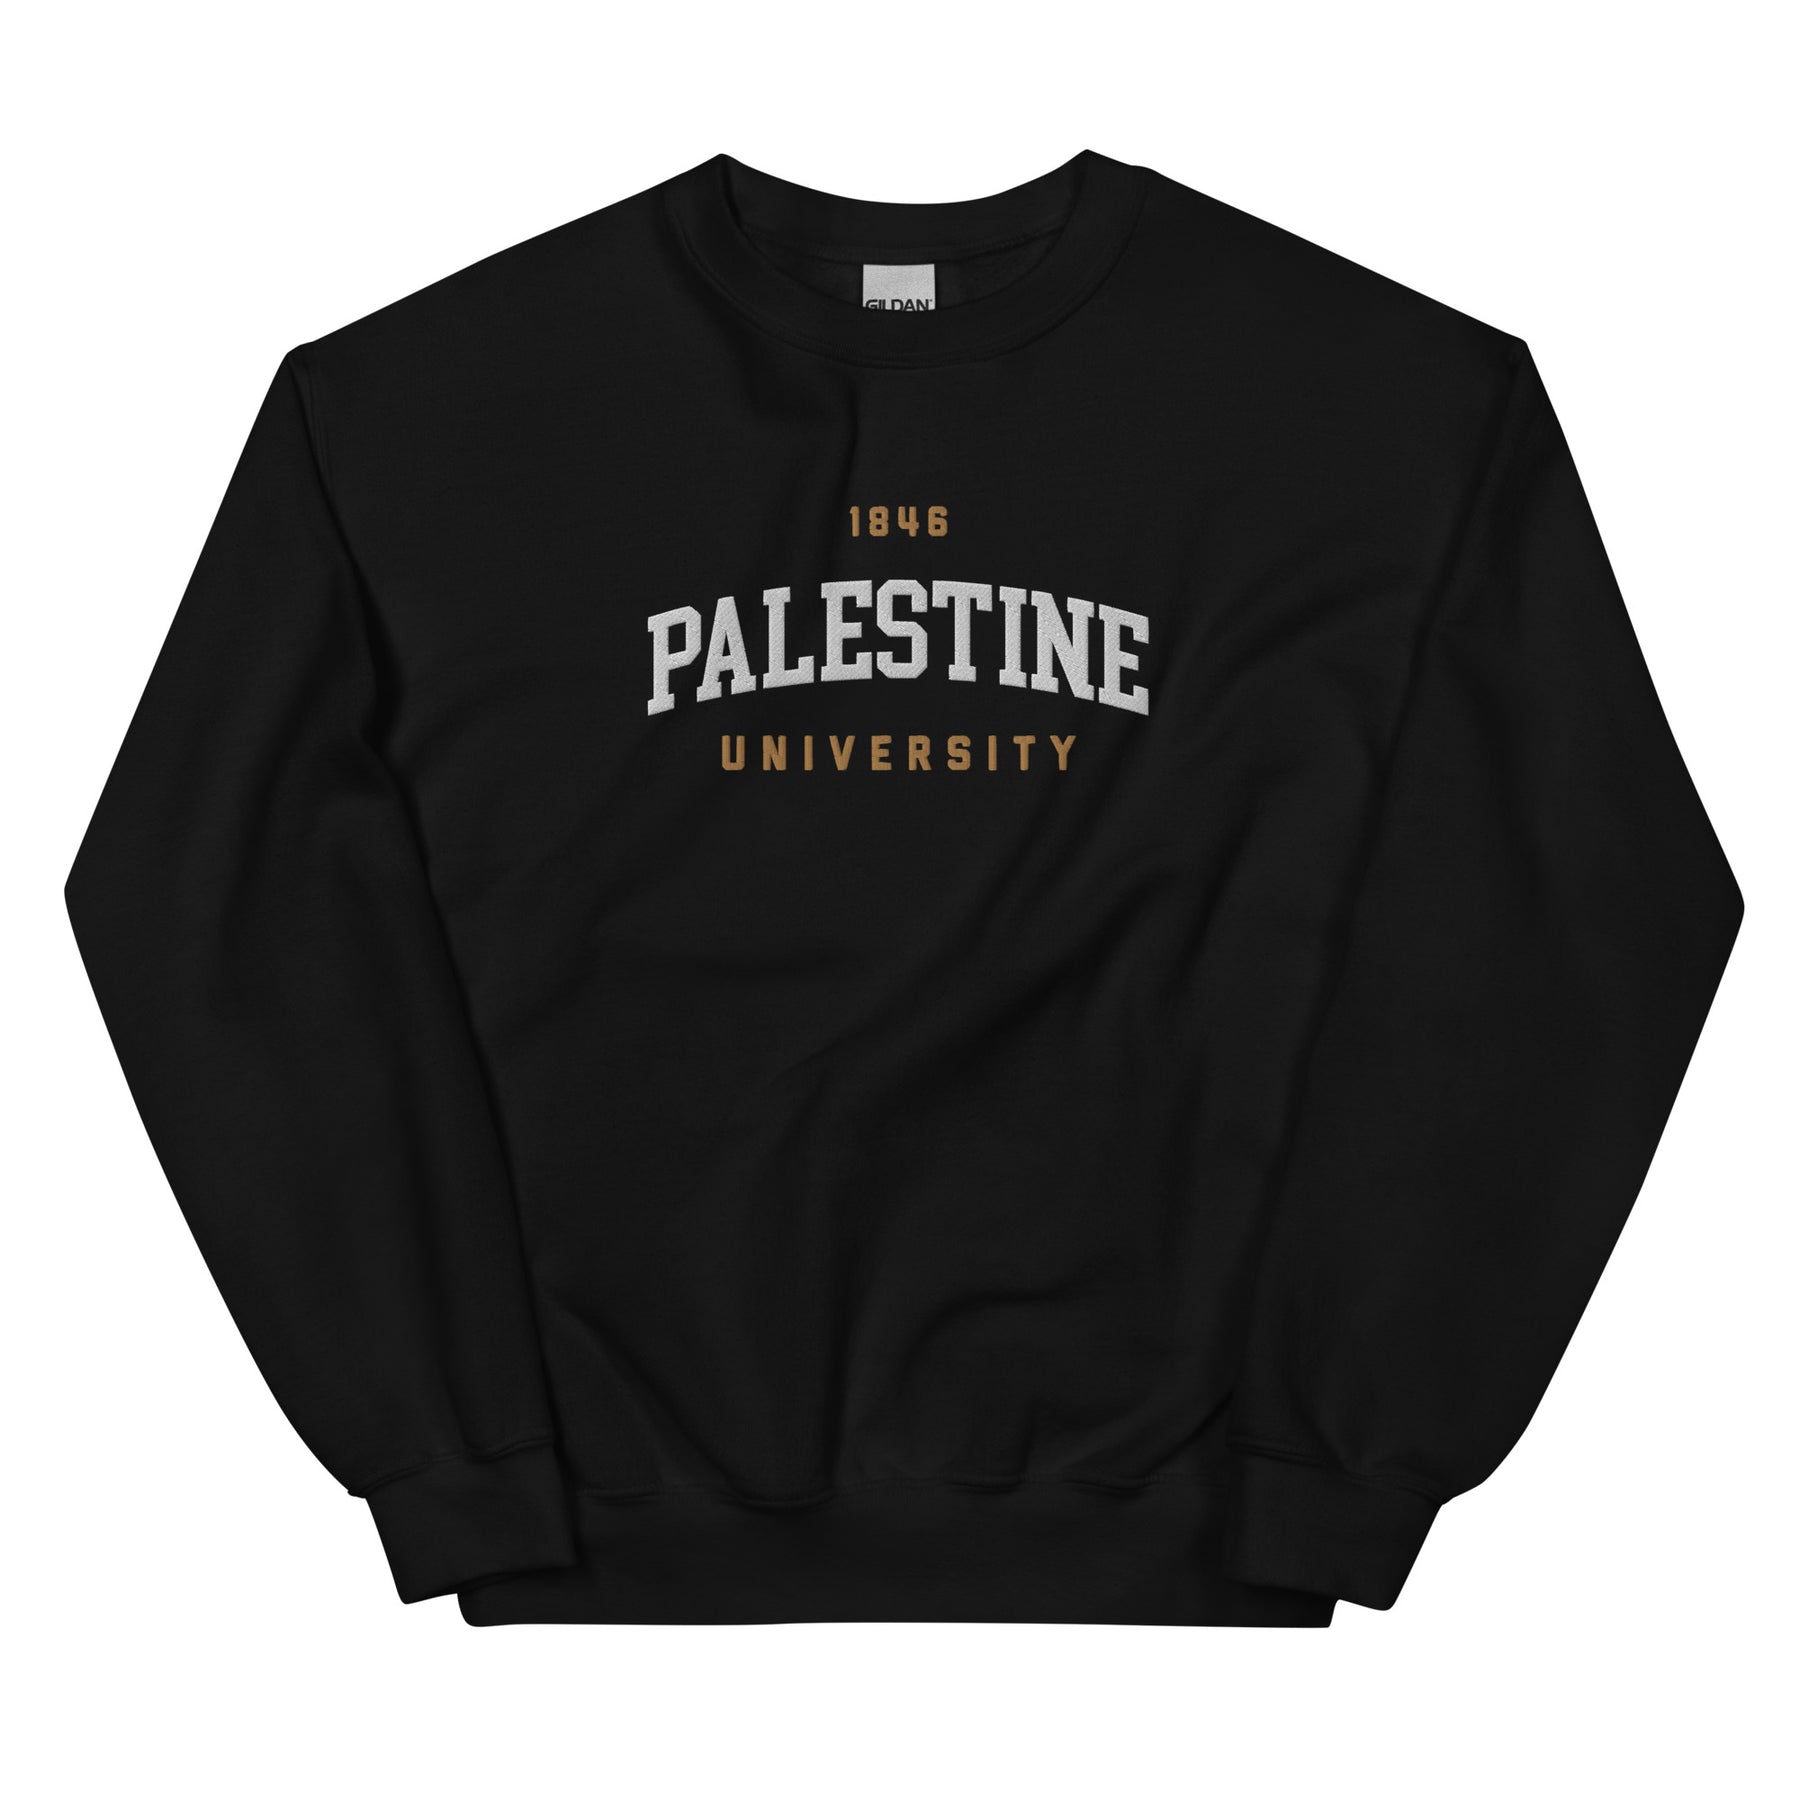 Palestine University 1846 sweatshirt in black by Dar Collective